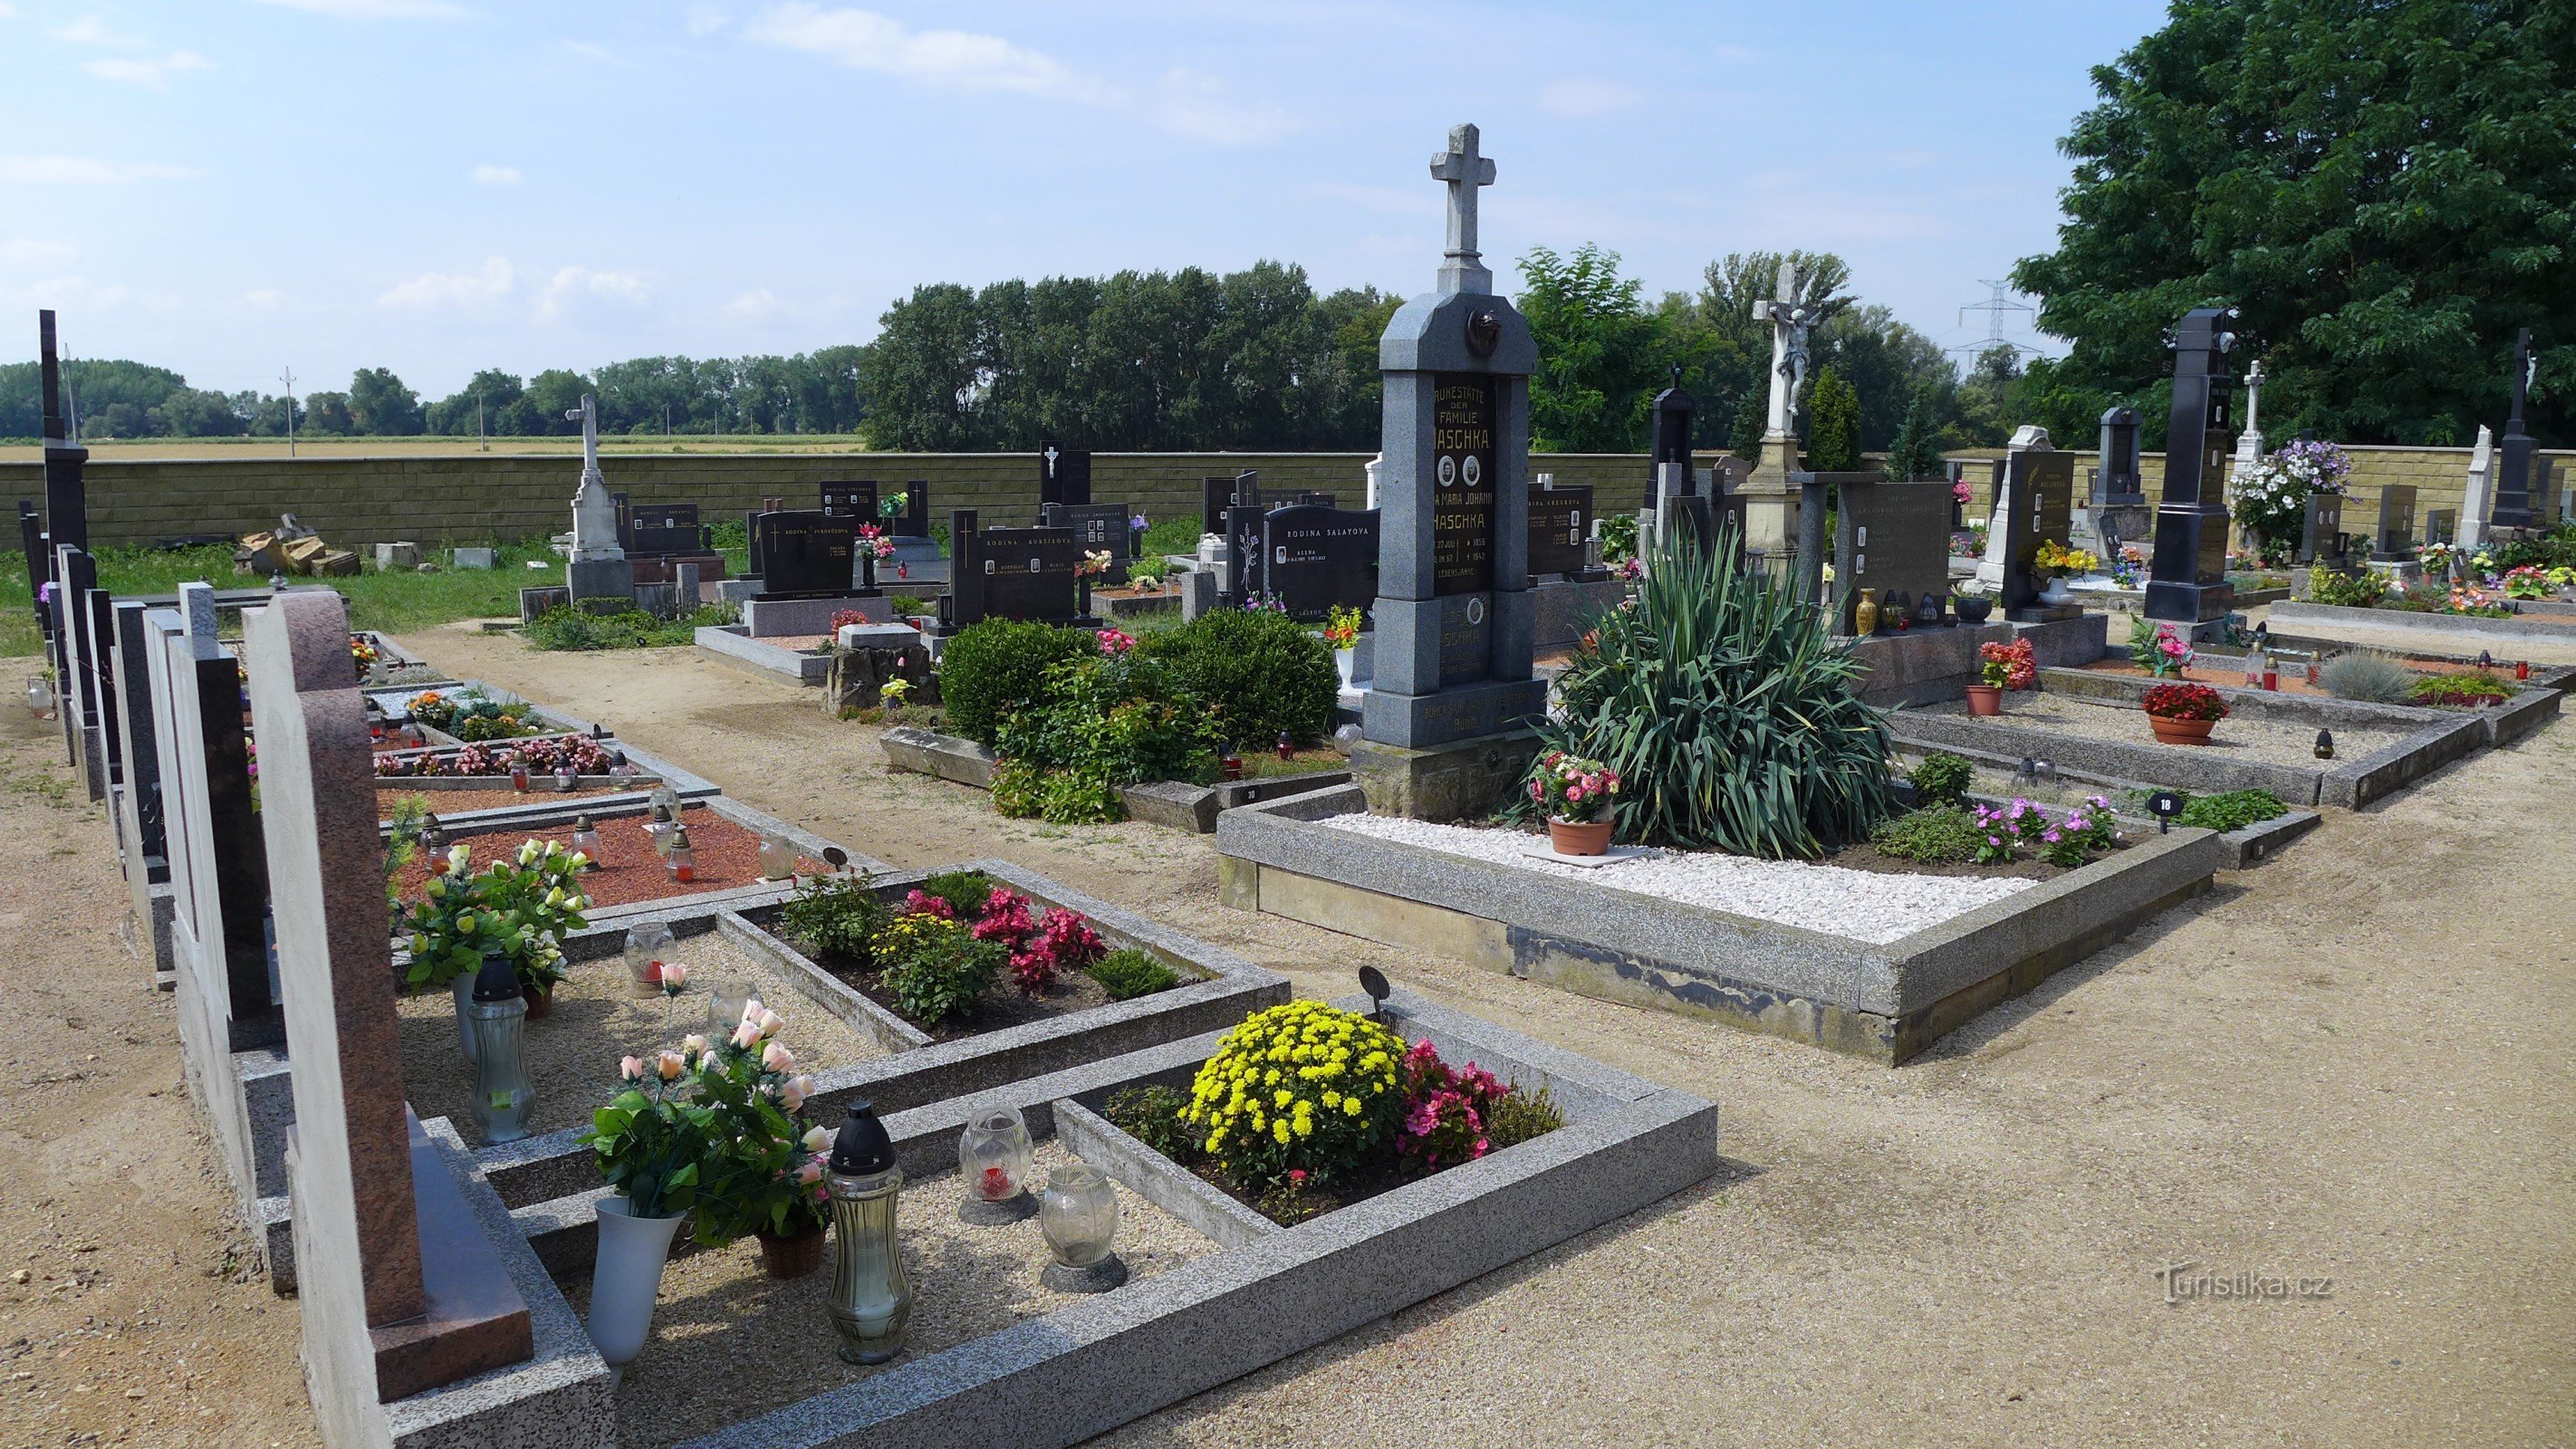 Nemčičky - cmentarz